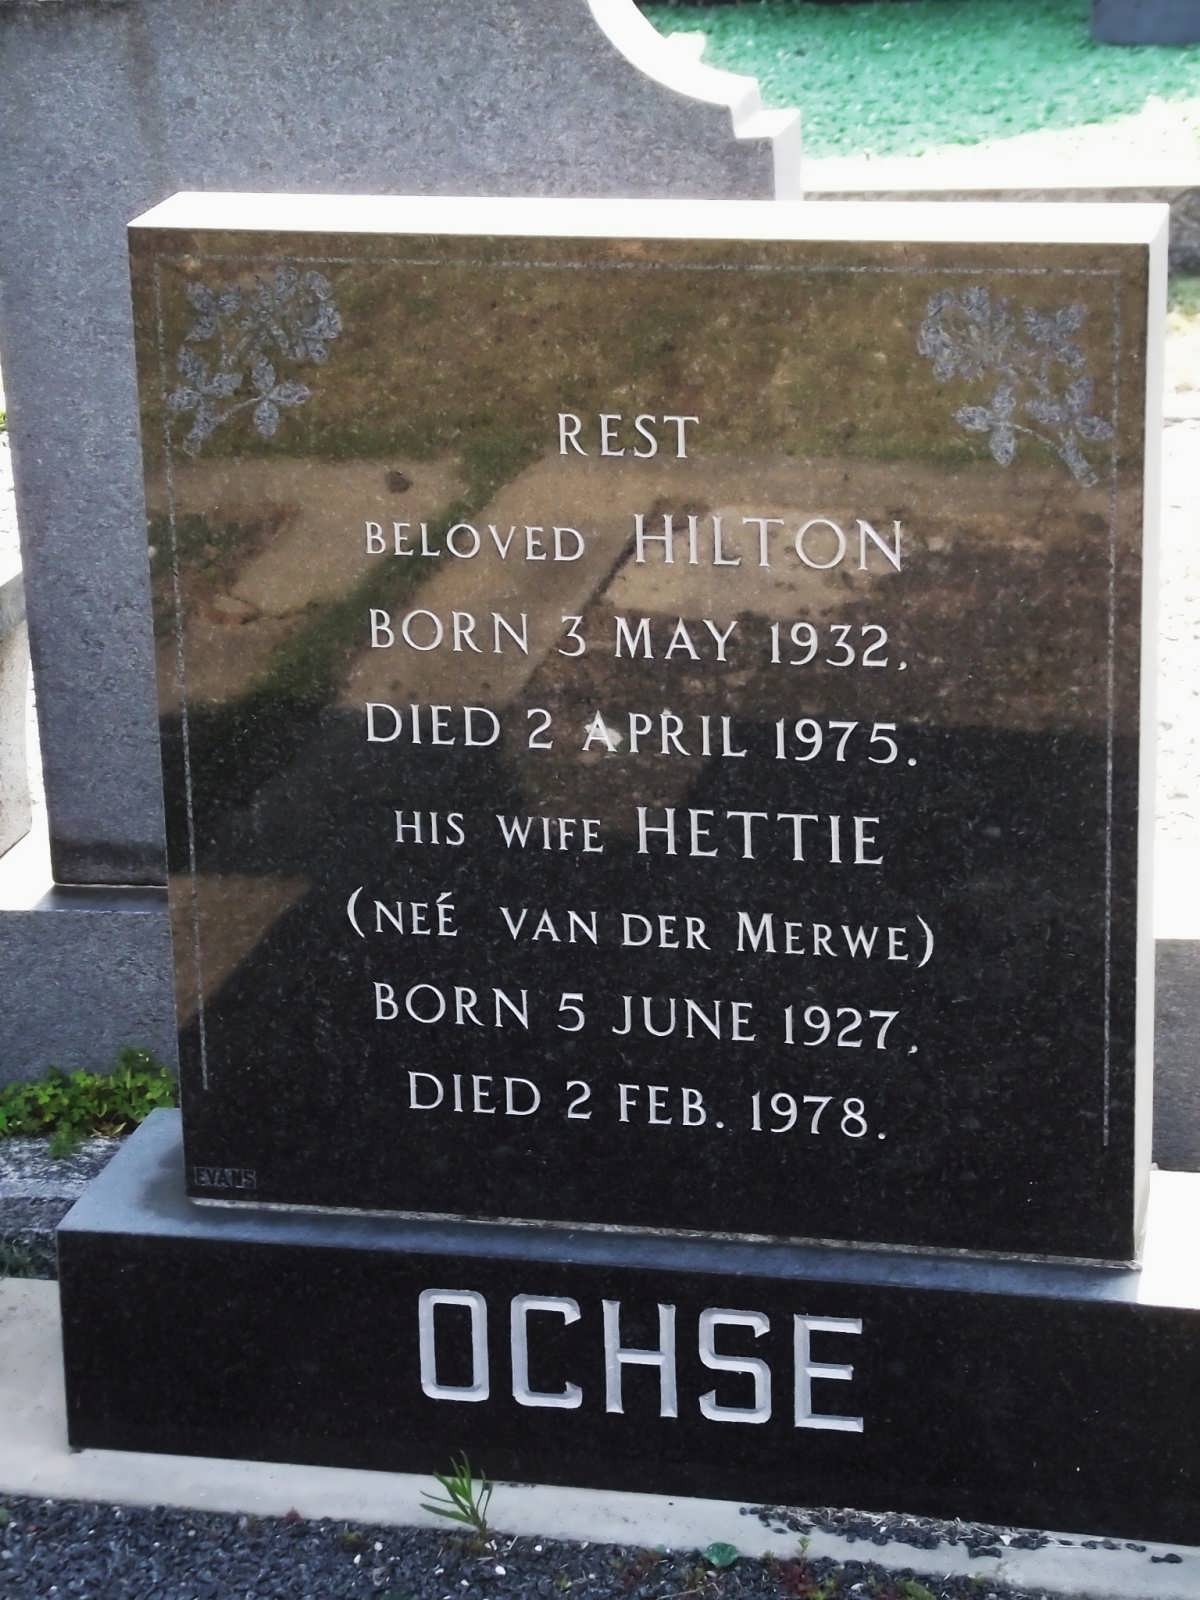 OCHSE Hilton 1932-1975 & Hettie VAN DER MERWE 1927-1978